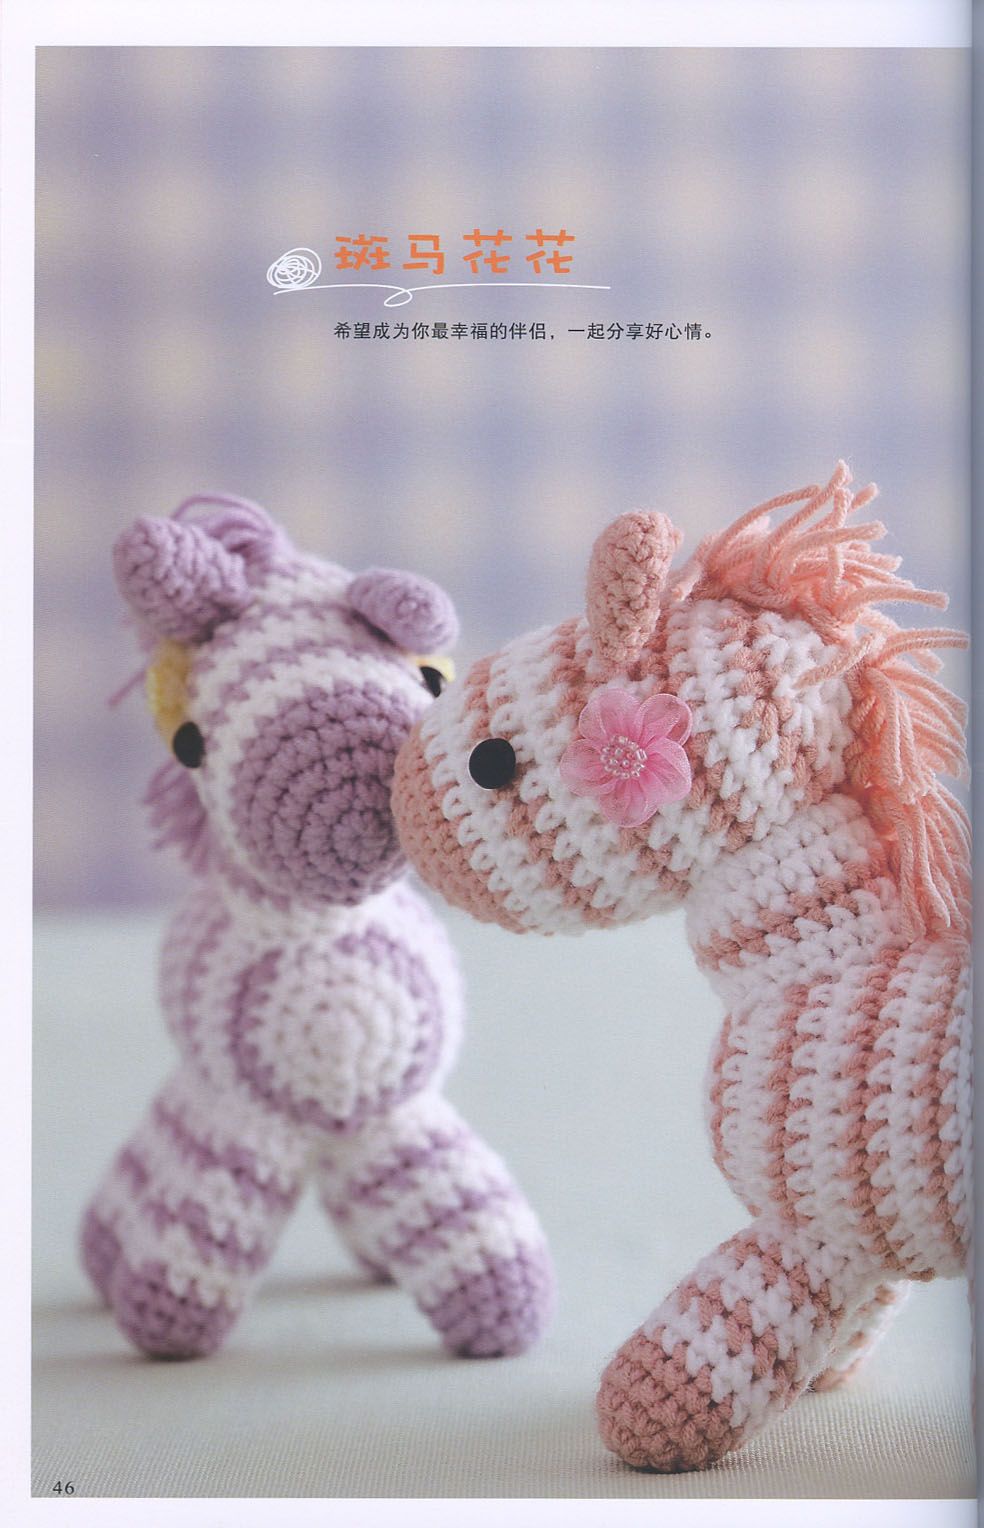 Two pink pony amigurumi pattern (1)